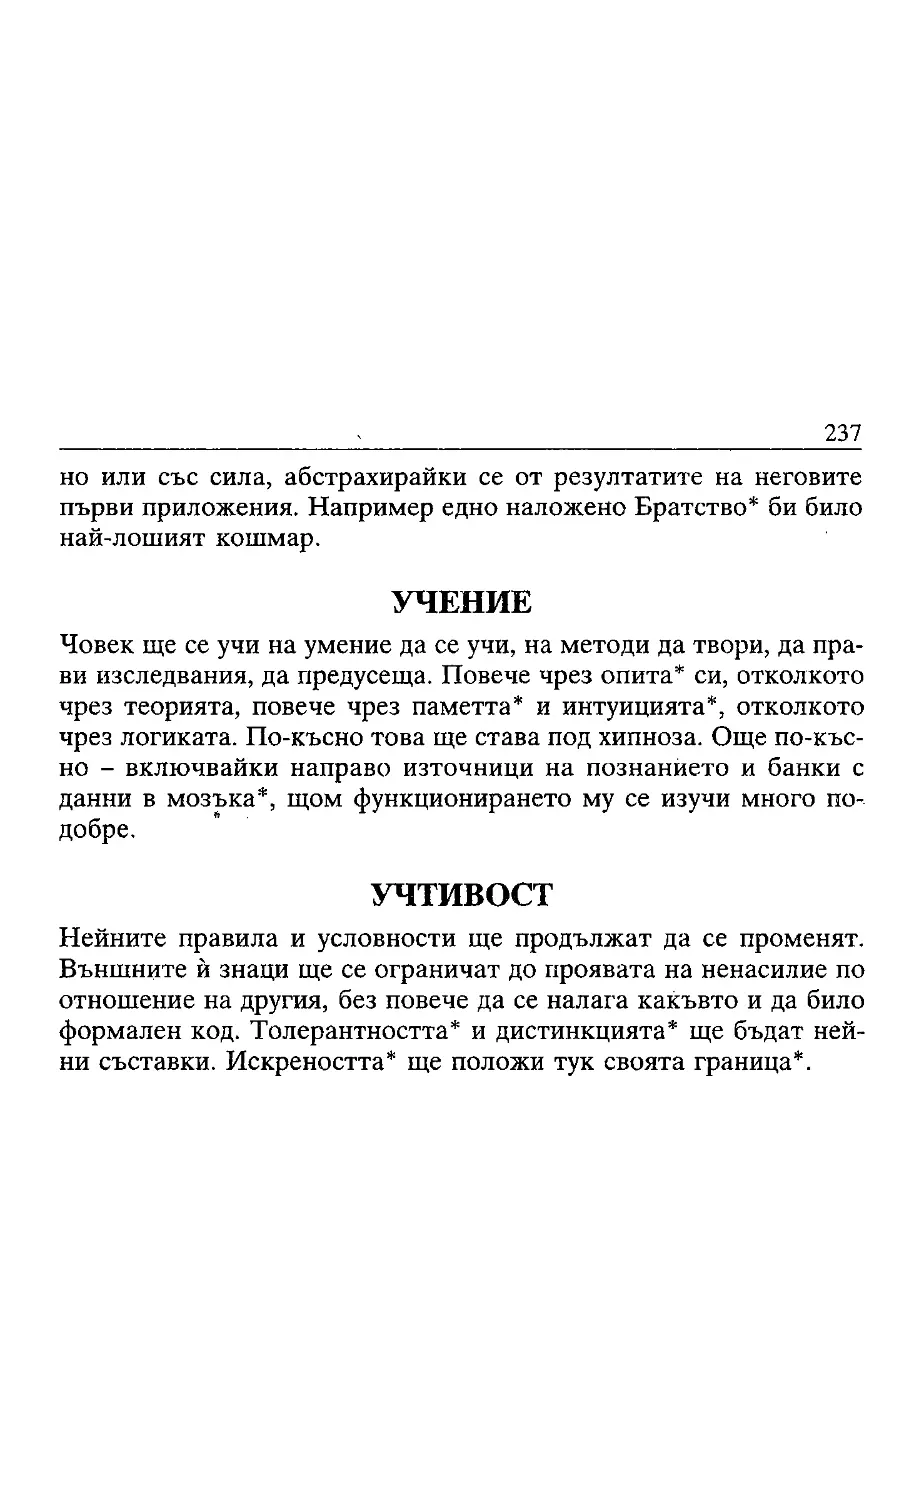 ﻿Жак Атали. Речник на 21 век_Page_117_Image_0001_2